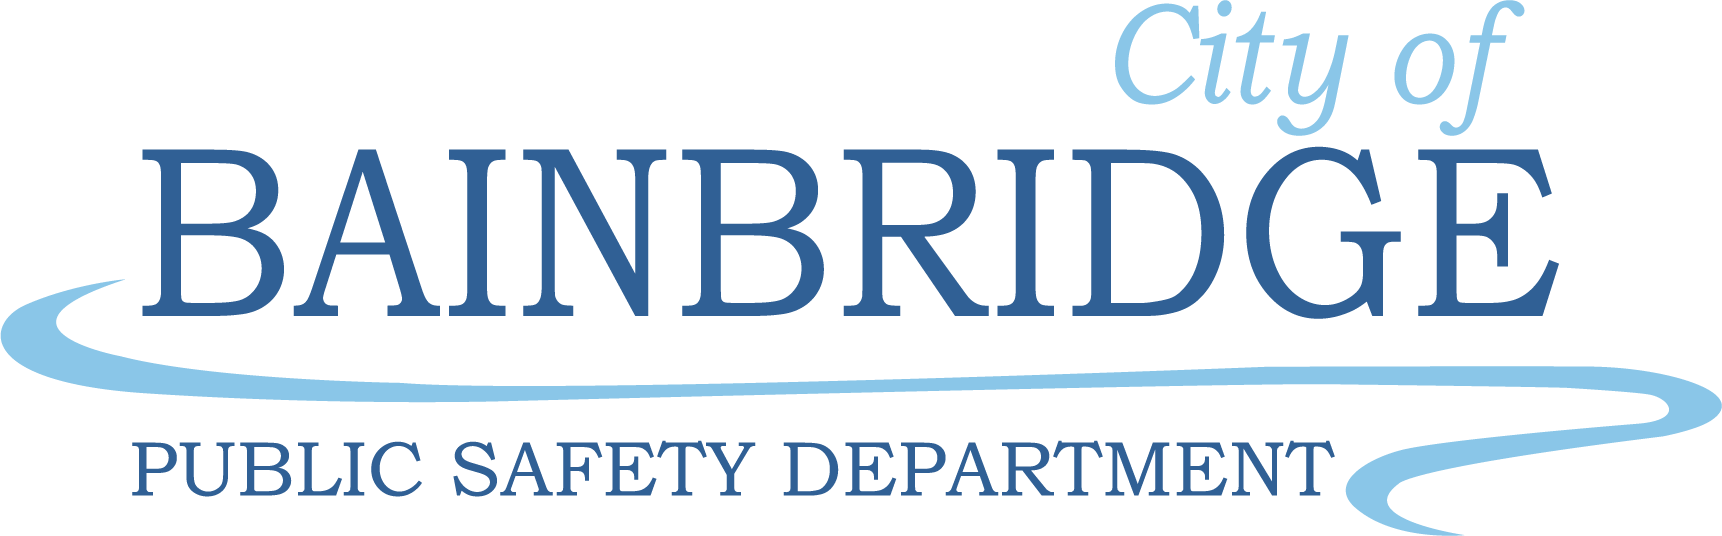 Bainbridge Public Safety Department, GA Public Safety Jobs